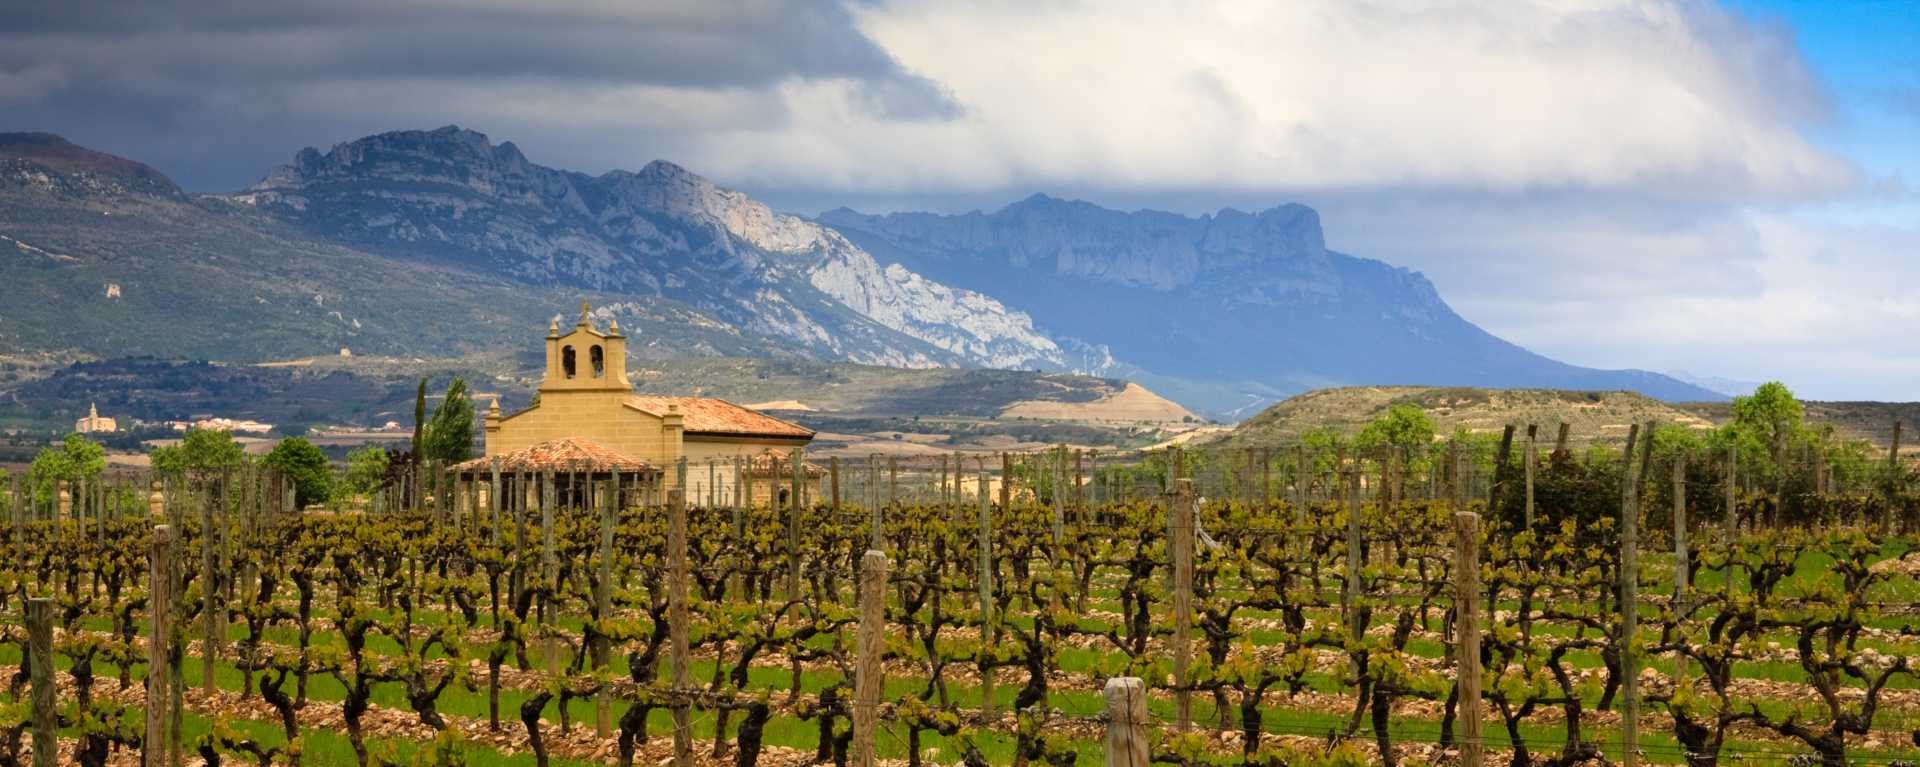 Image for Bierzo Wine Spain content section